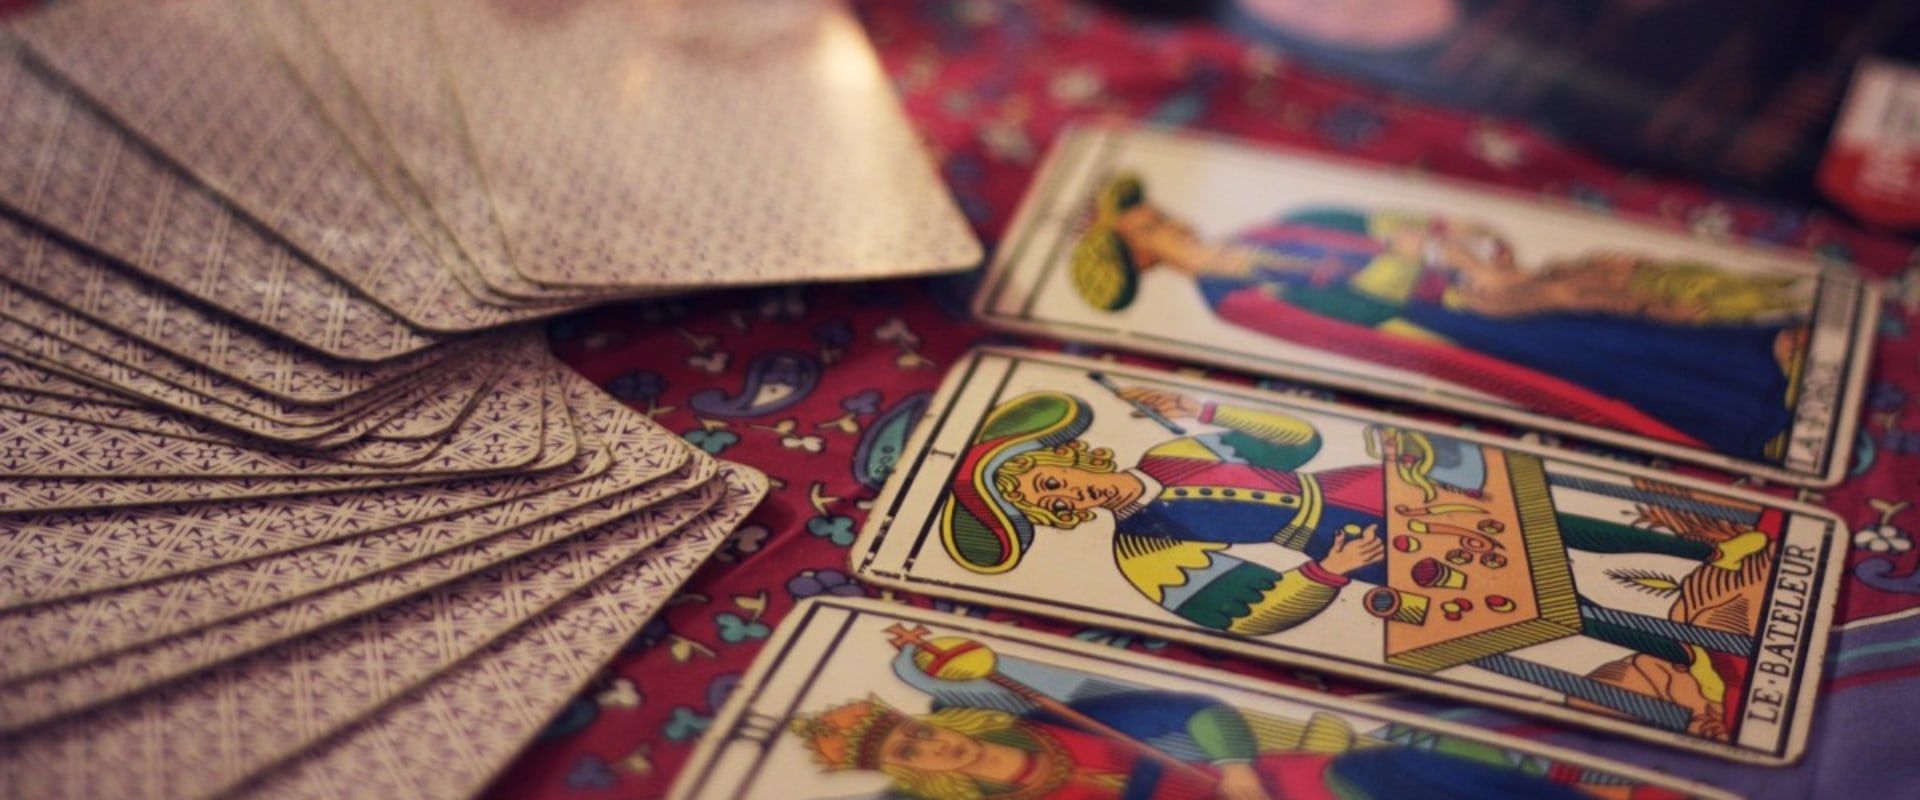 Understanding the Tarot Reading Process